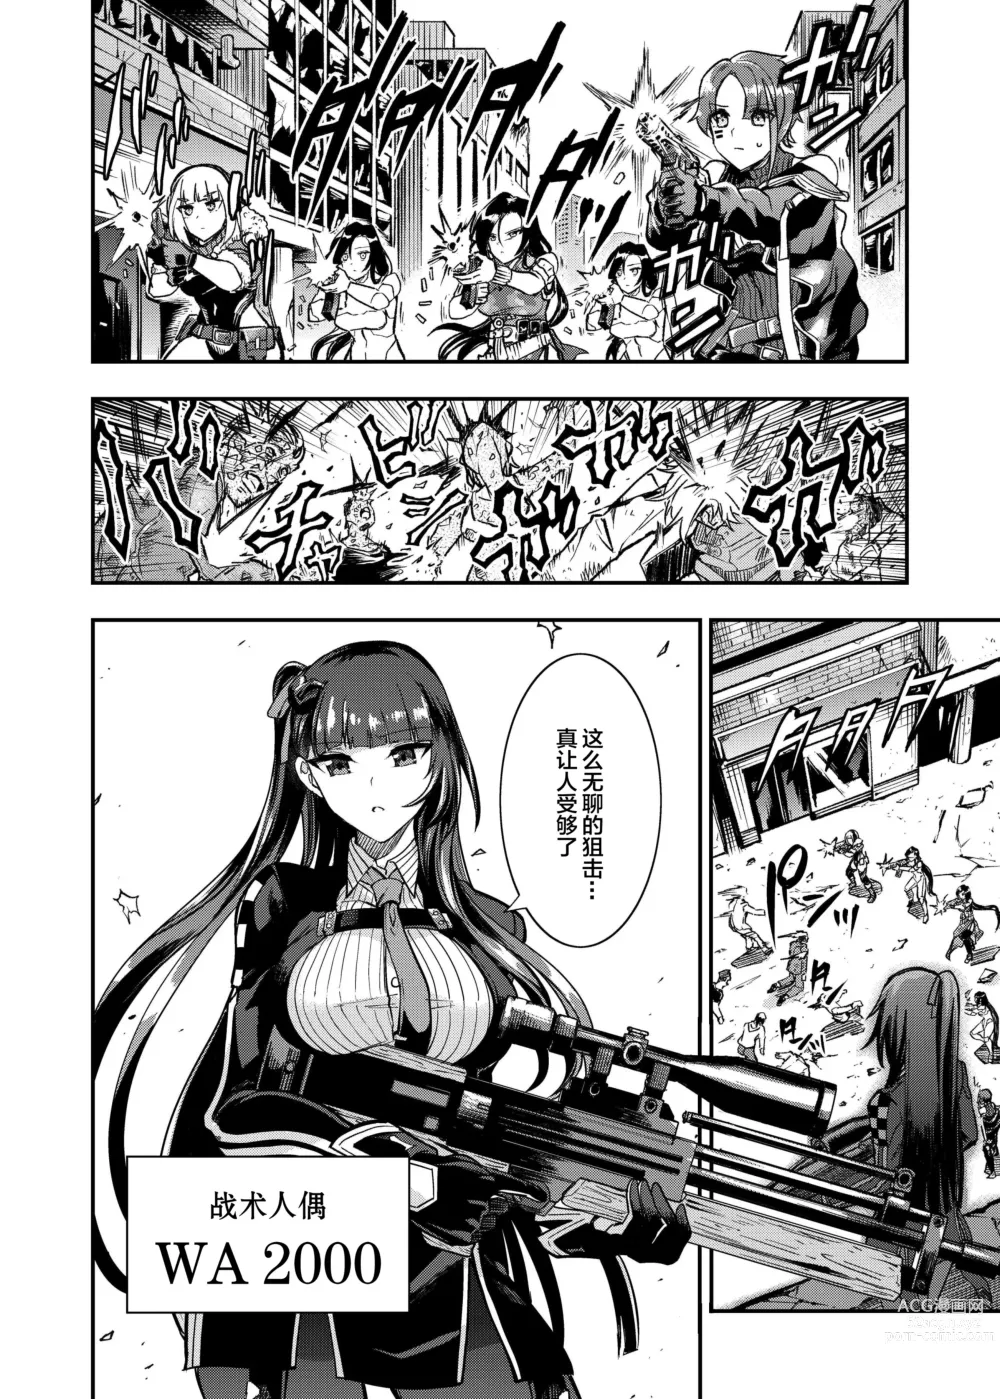 Page 3 of doujinshi Marunomare Wa-chan